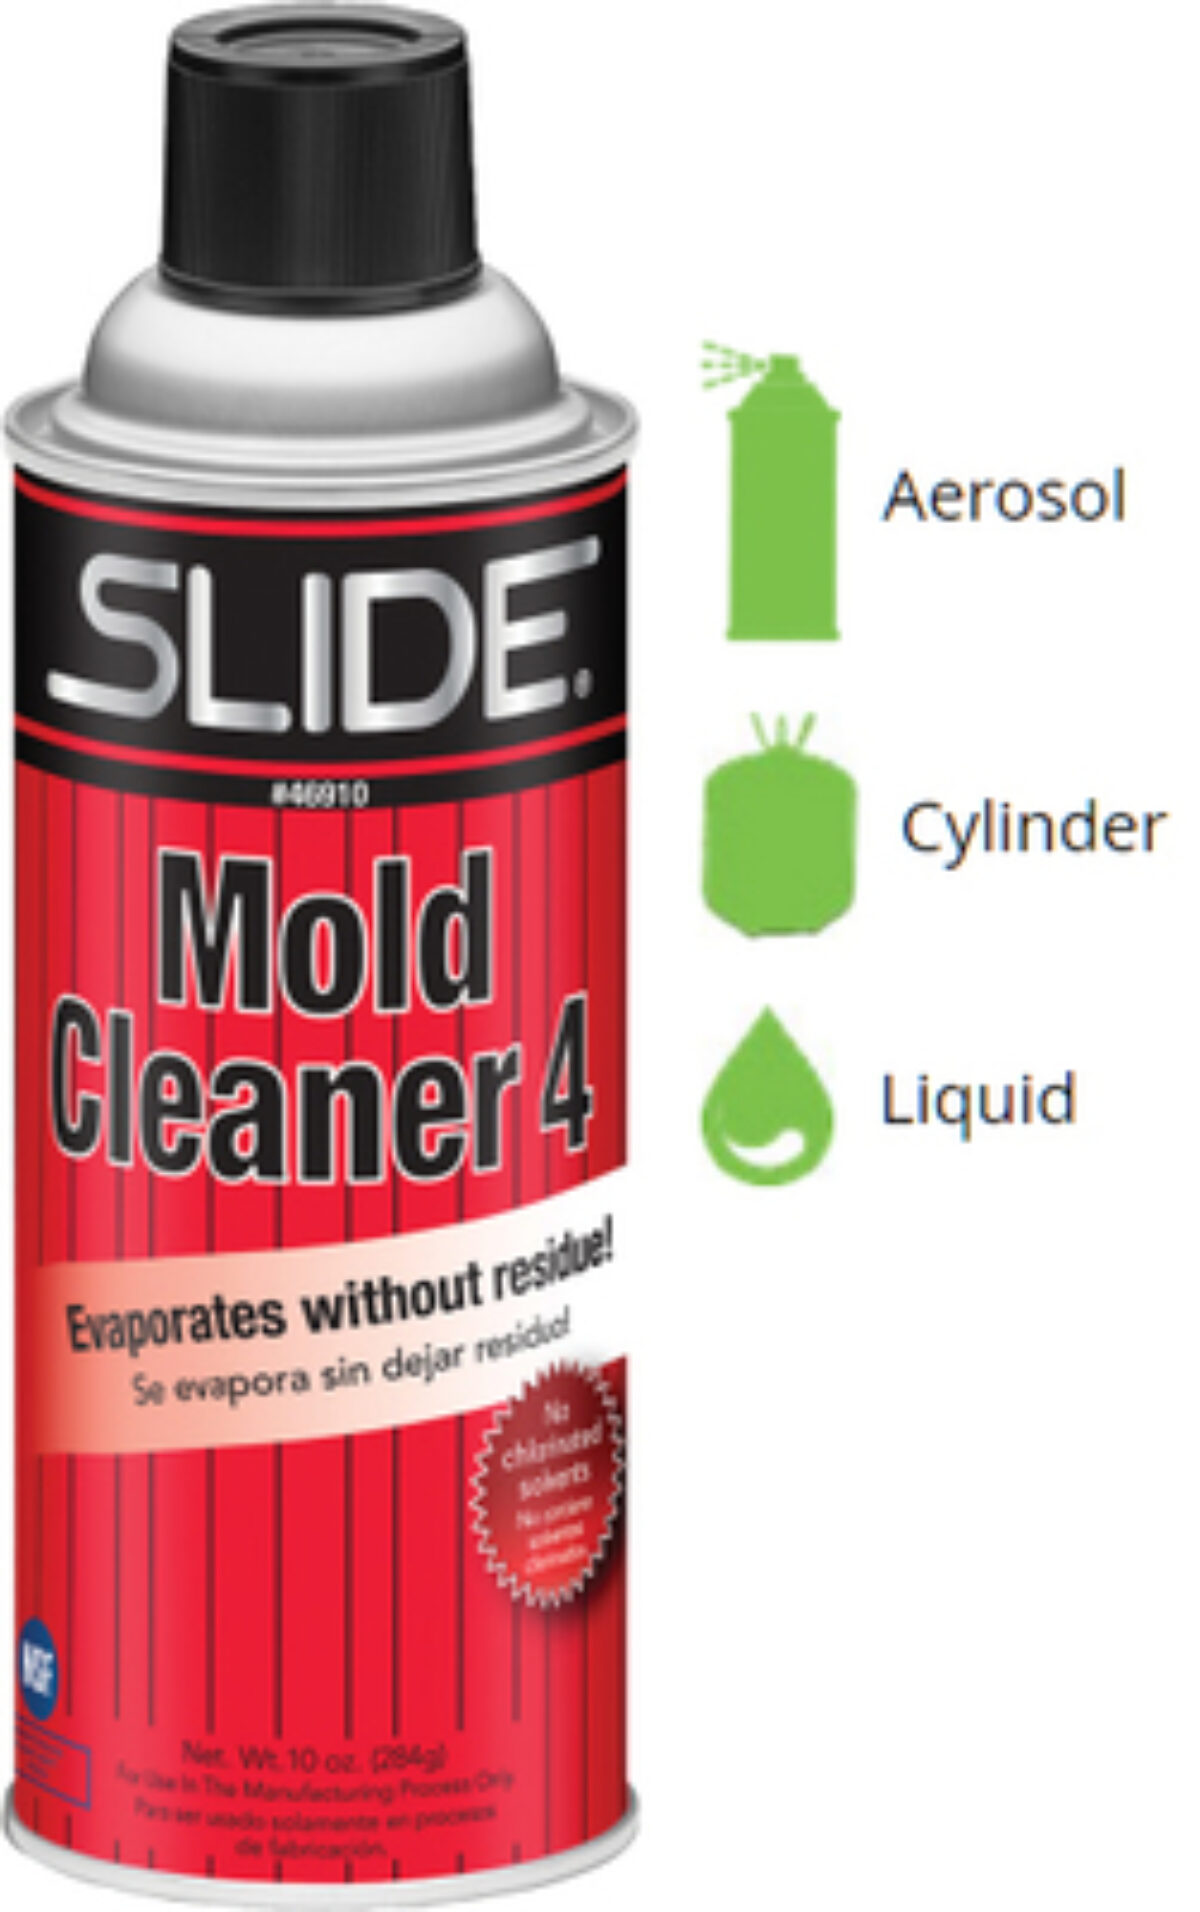 Mold Cleaner Plus Degreaser 4 Aerosol 46910 Slide -Thermal-Tech